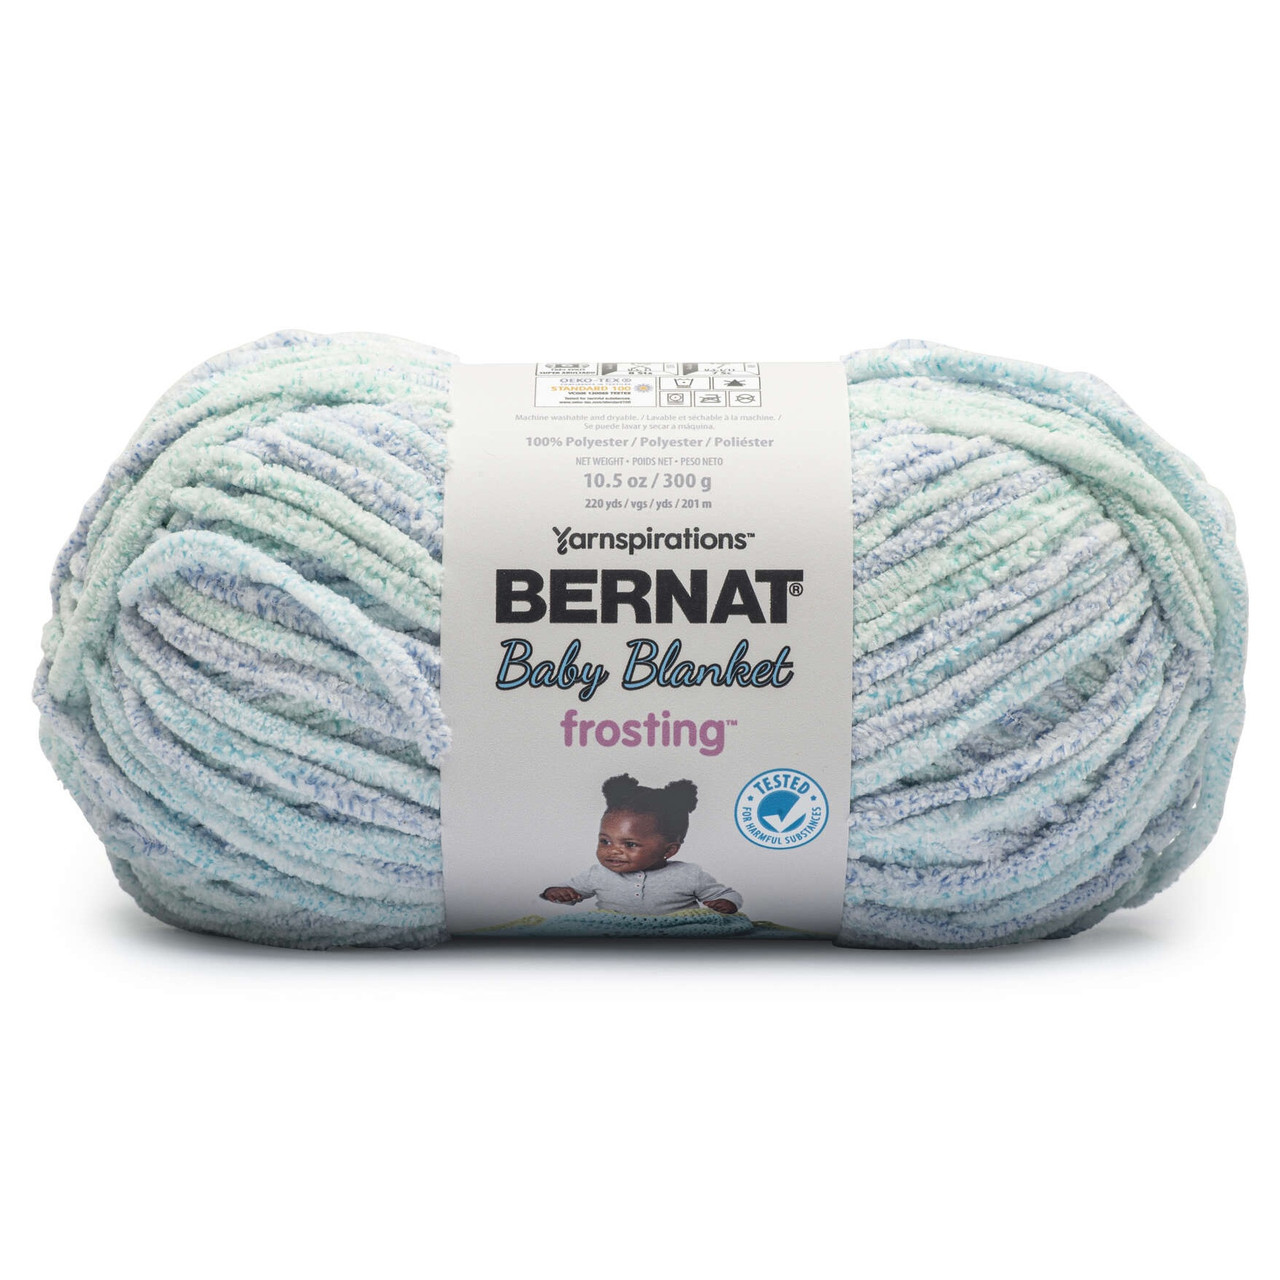 Bernat Baby Blanket Frosting Yarn-Seaside 161161-61004 - GettyCrafts